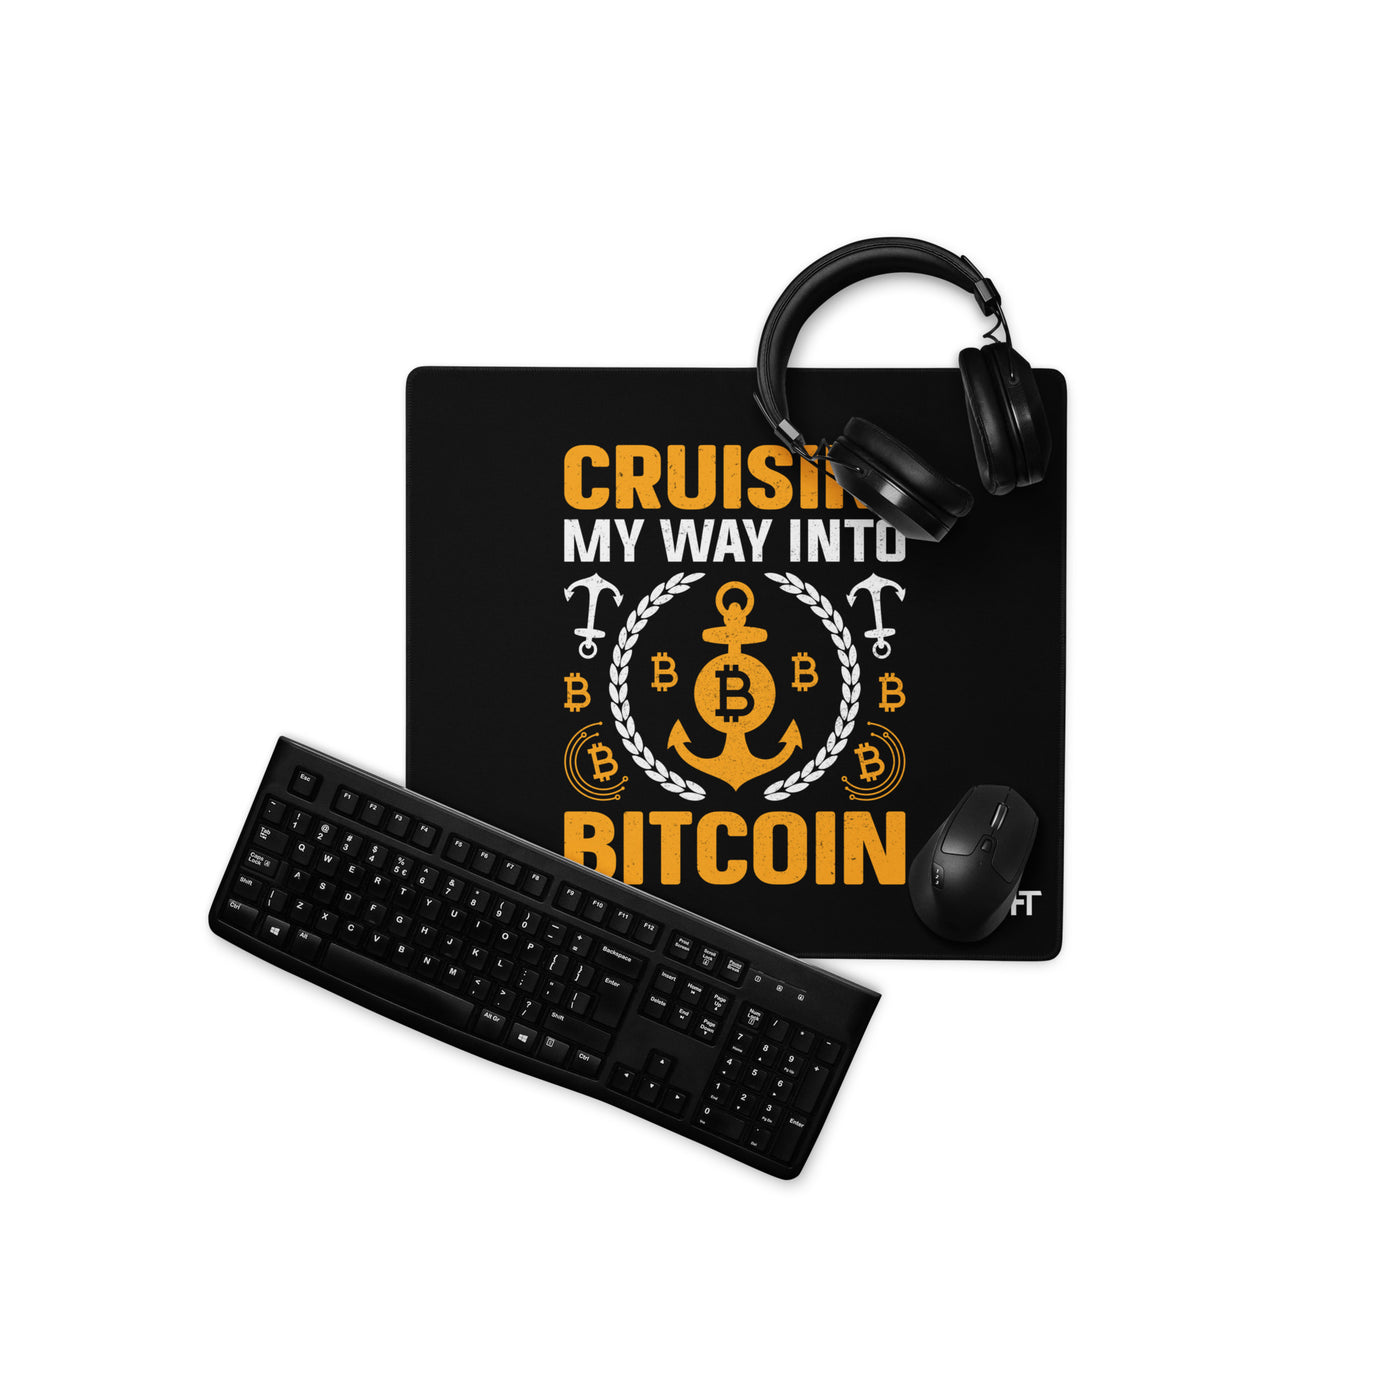 Cruising My Way into Bitcoin - Desk Mat